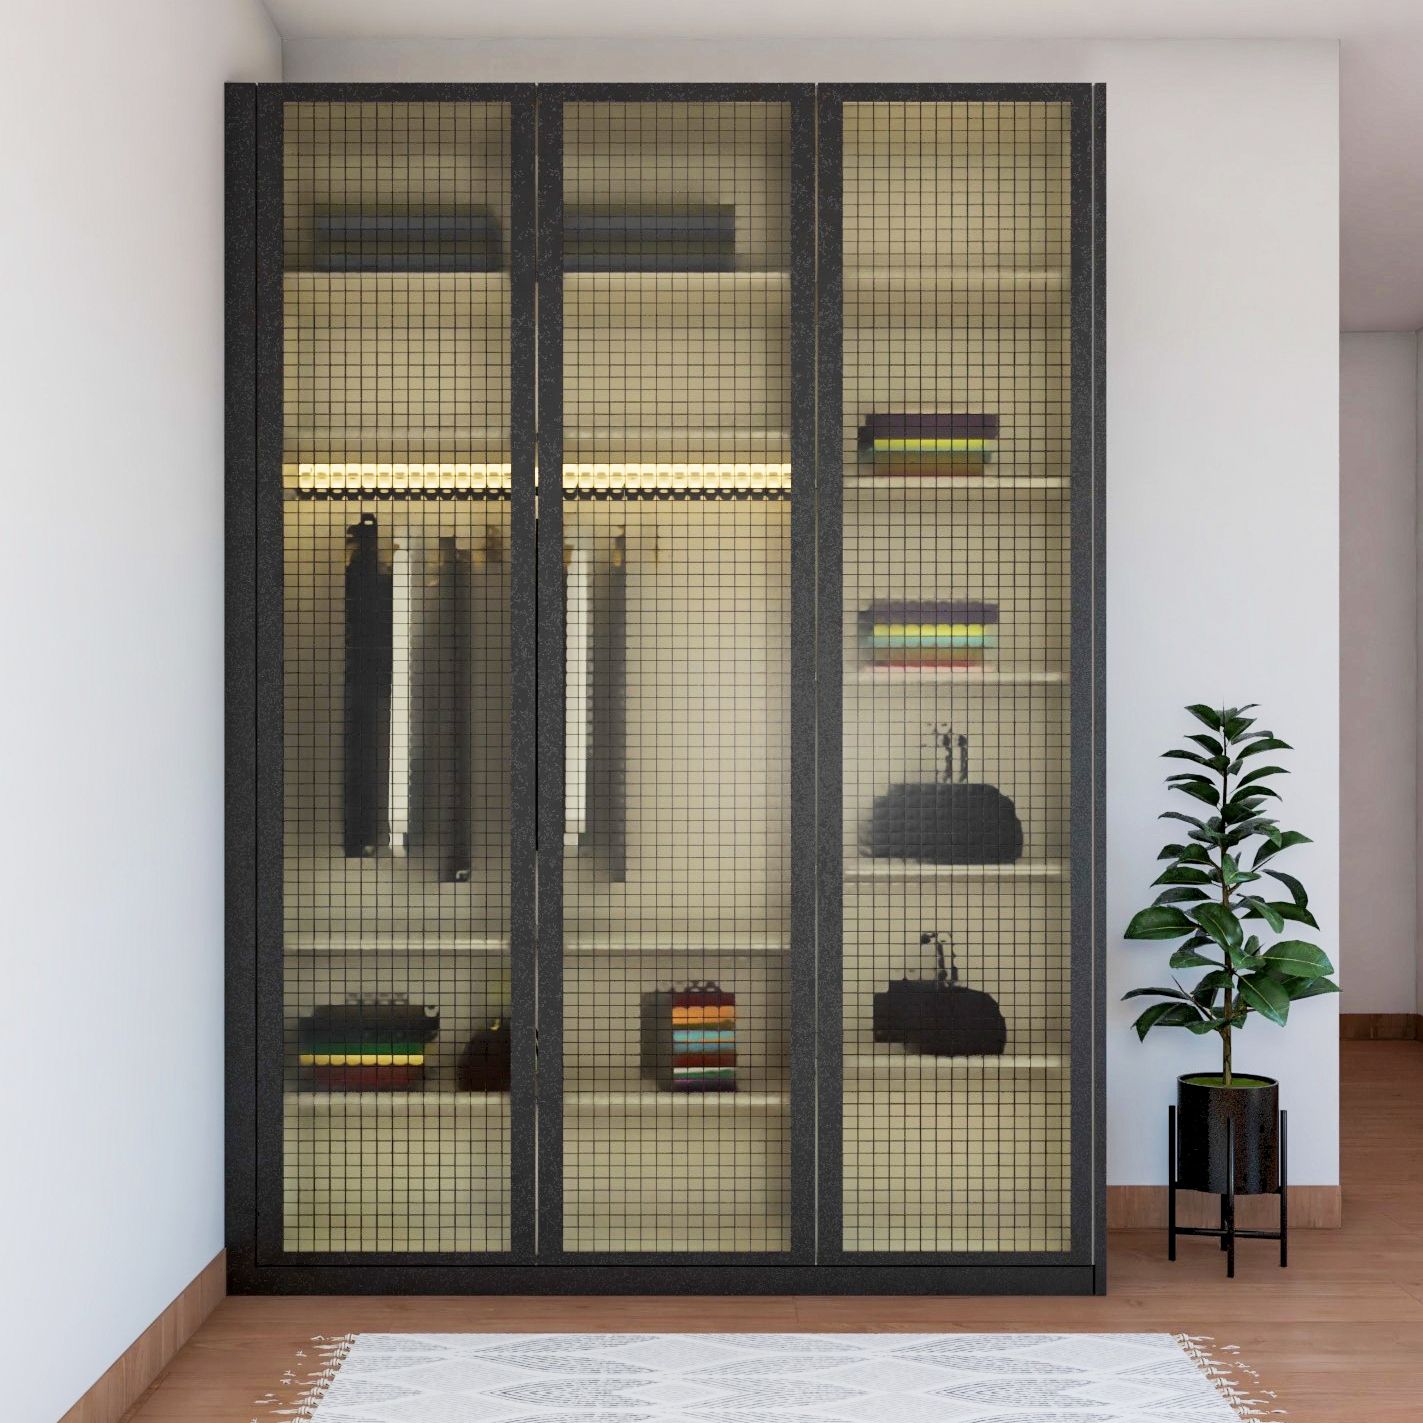 Modern 3-Door Swing Wardrobe Design With Mesh Glass Shutter